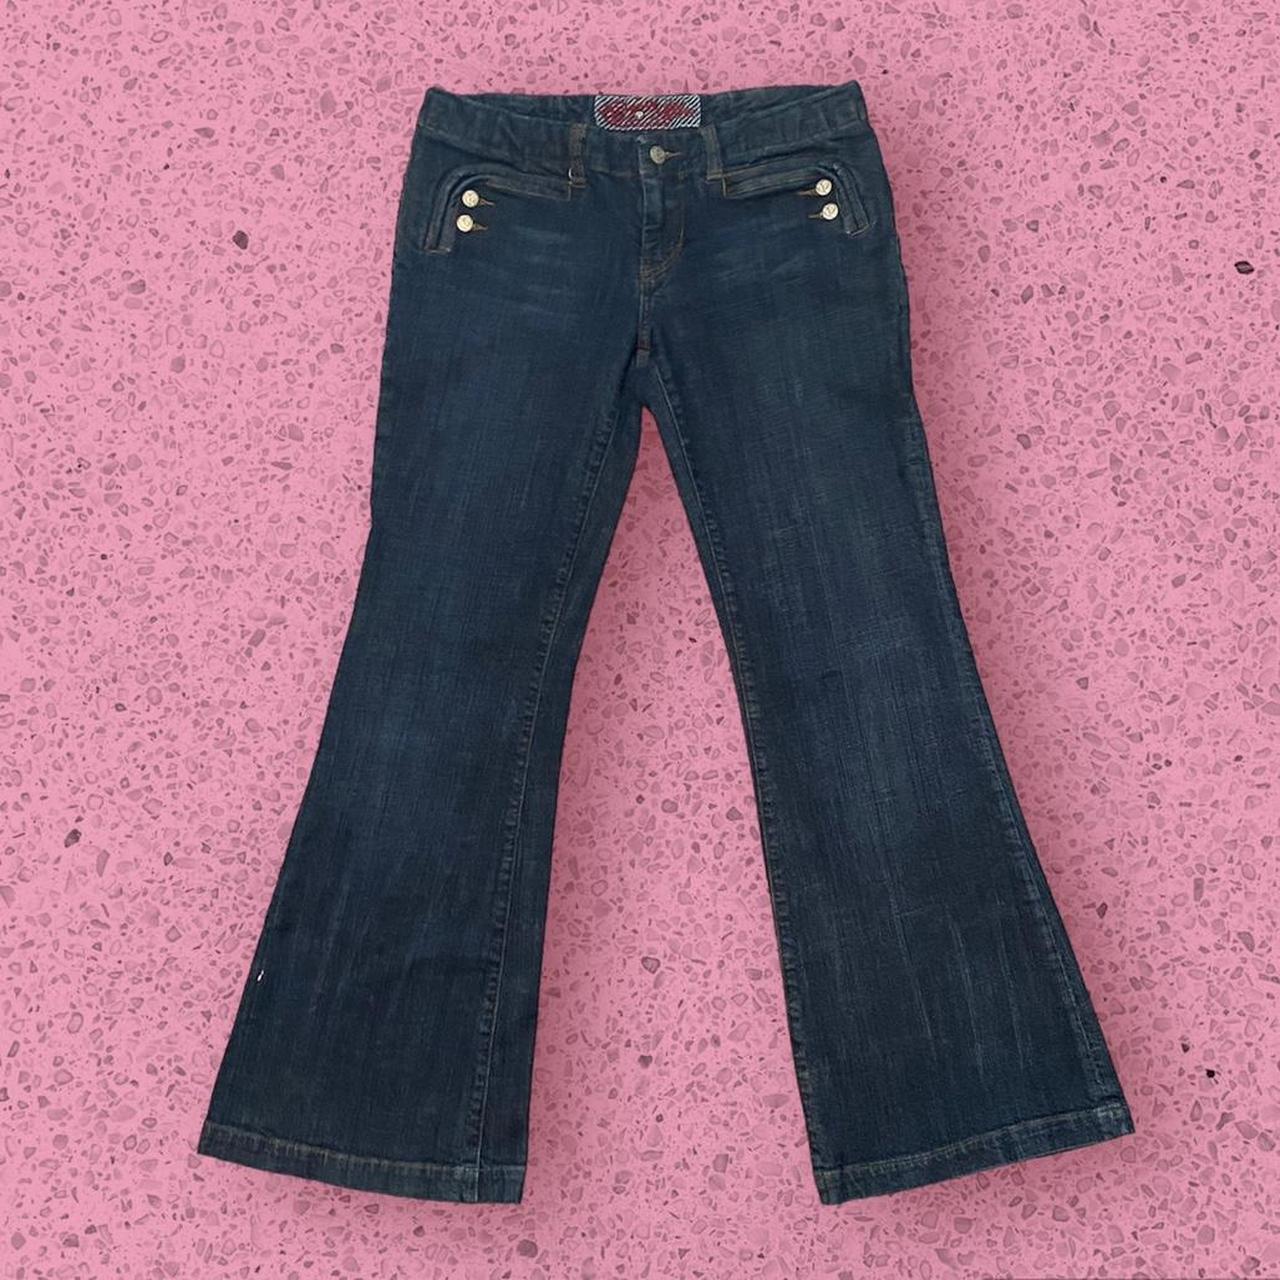 Quincy Y2k Vintage low rise flare jeans 💞 Super... - Depop